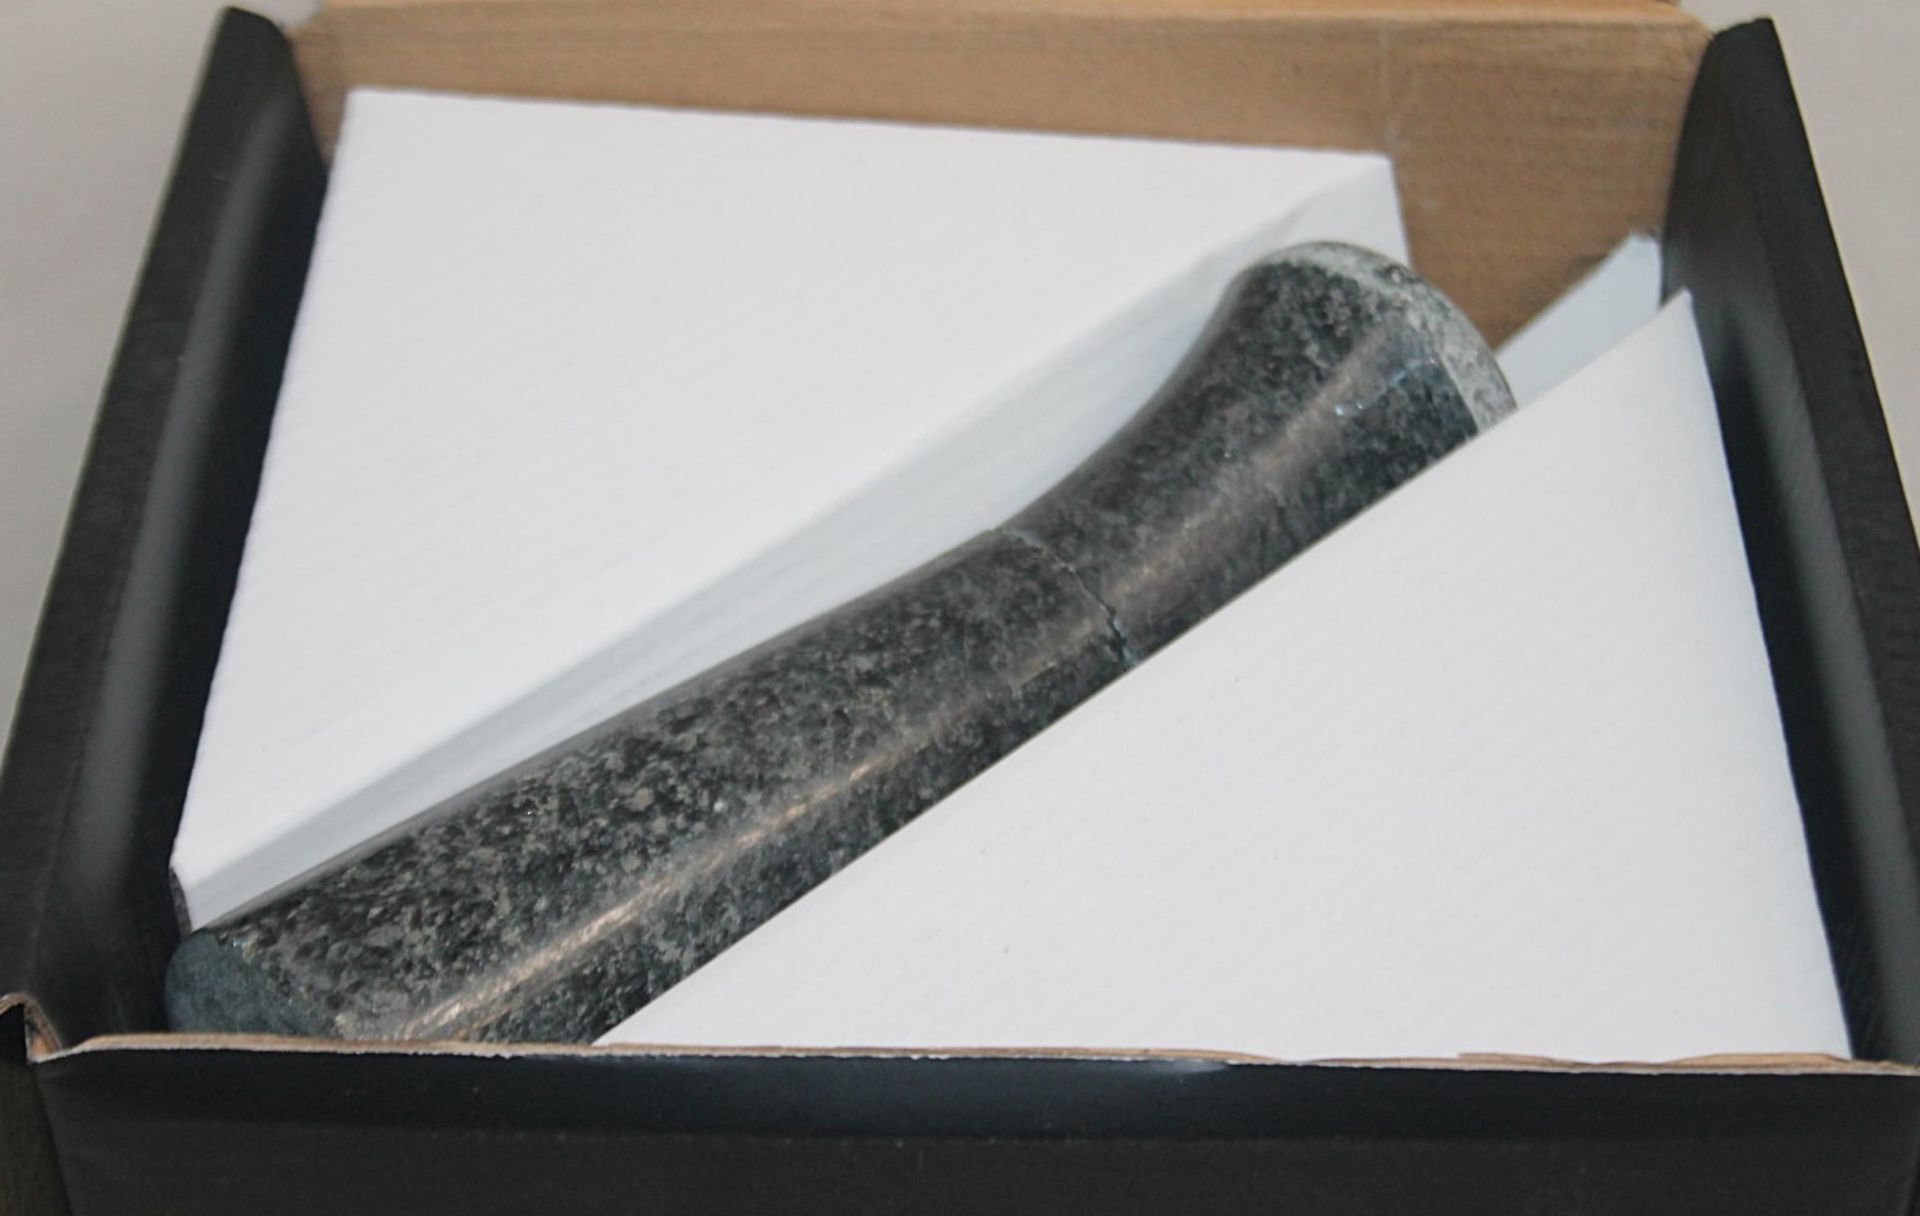 1 x COLE & MASON Granite Pestle & Mortar 18cm, Black - Unused Boxed Stock - Ref: 3310048/HAS2103/ - Image 3 of 8